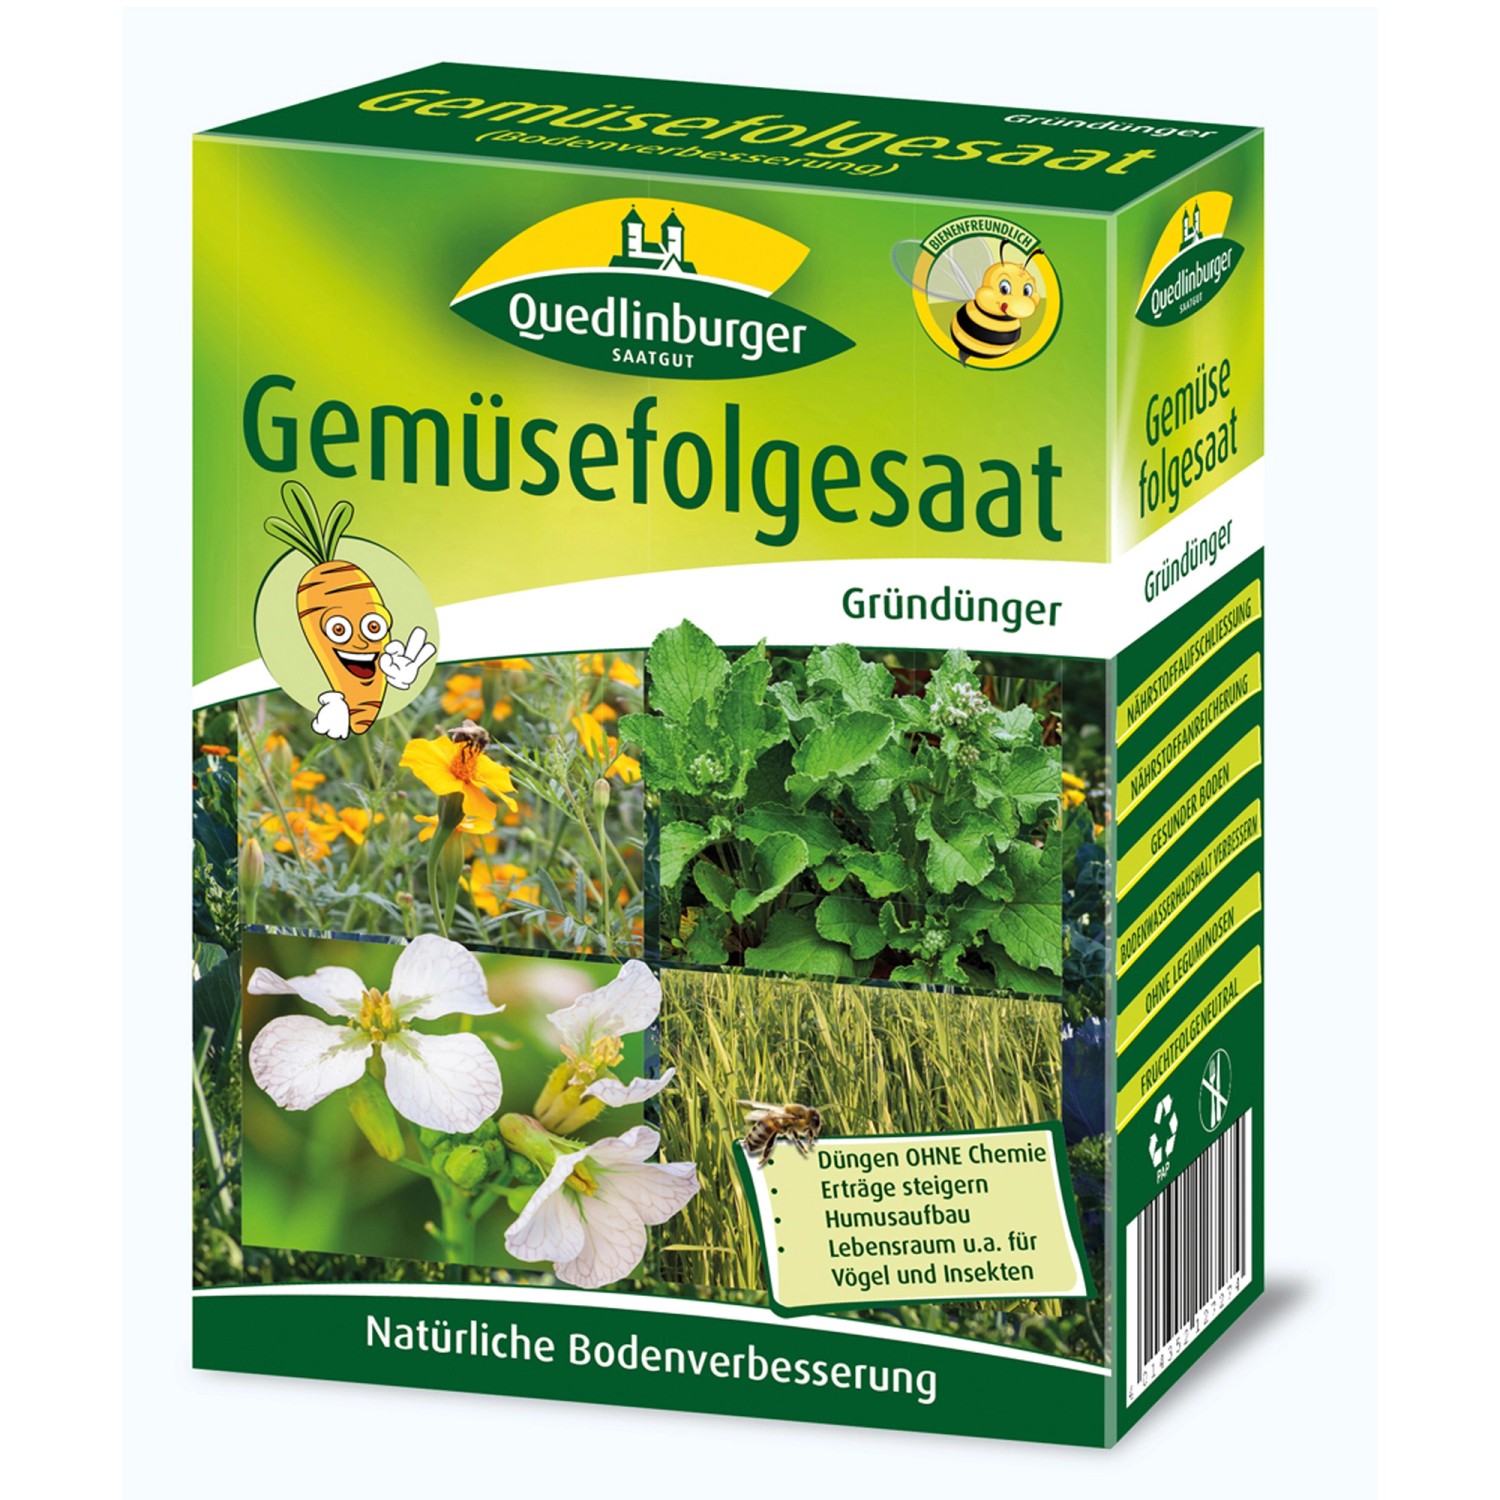 Quedlinburger Gemüsefolgesaat Faltschachtel günstig online kaufen